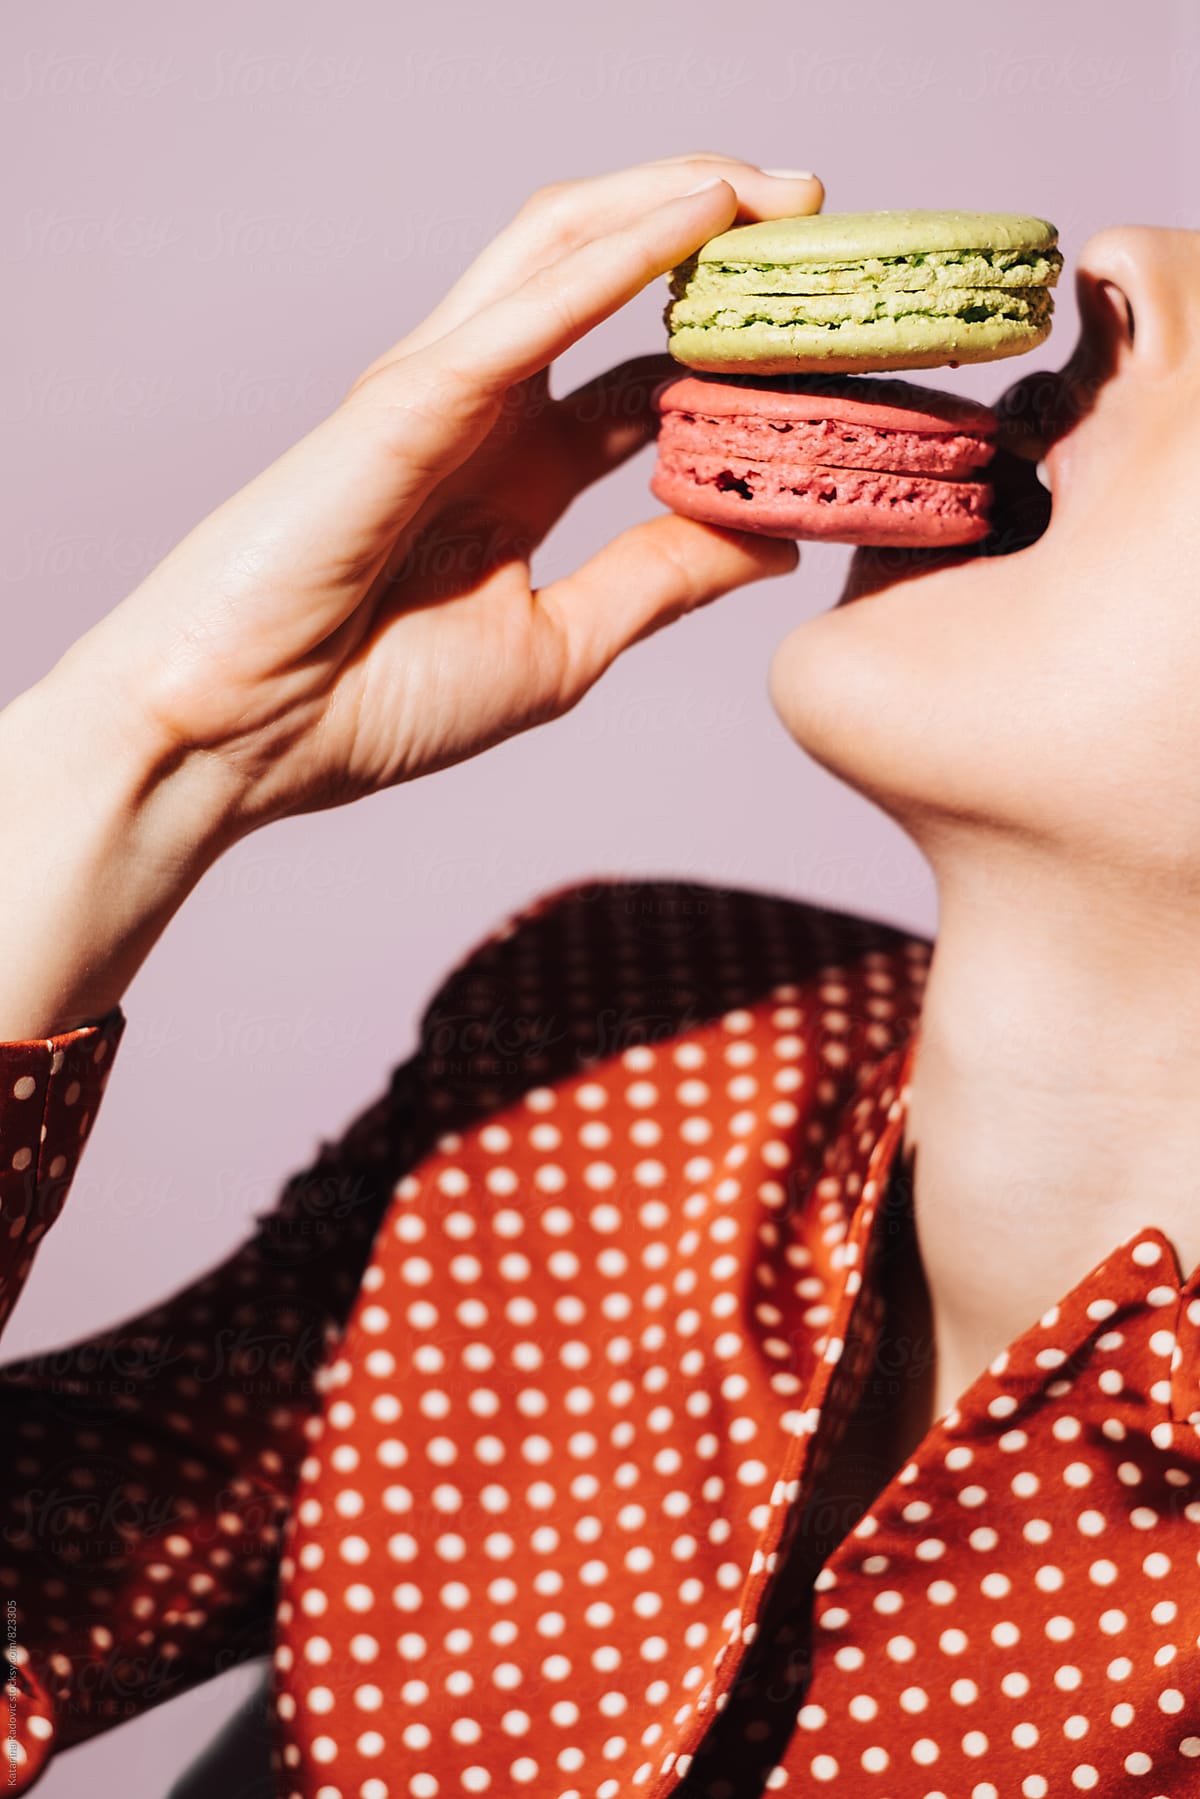 Sensual Woman Posing While Eating Two Macarons